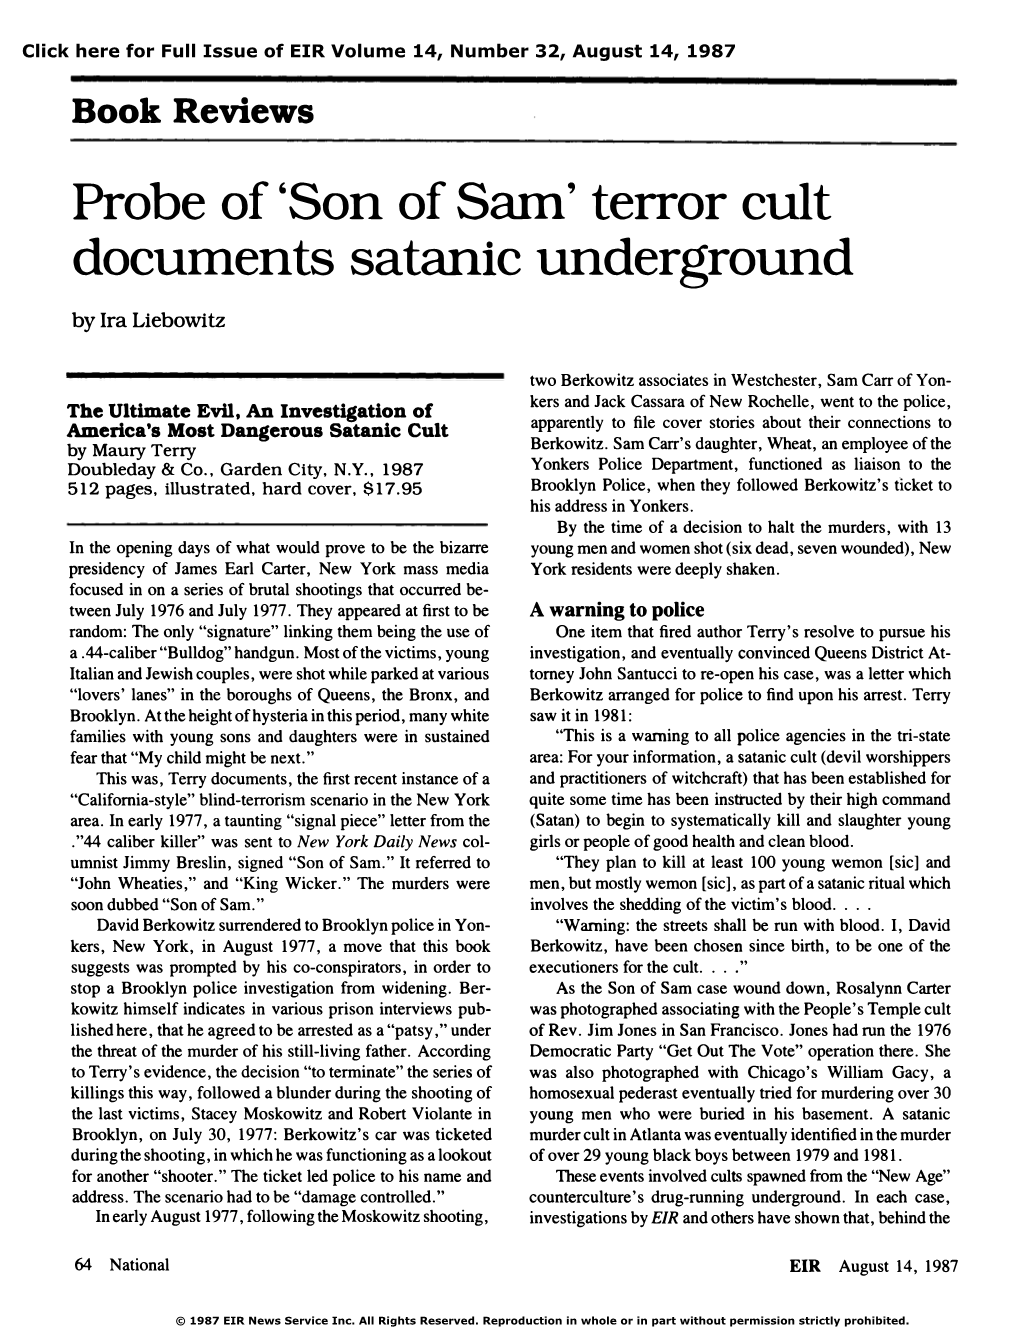 Probe of 'Son of Sam' Terror Cult Documents Satanic Underground